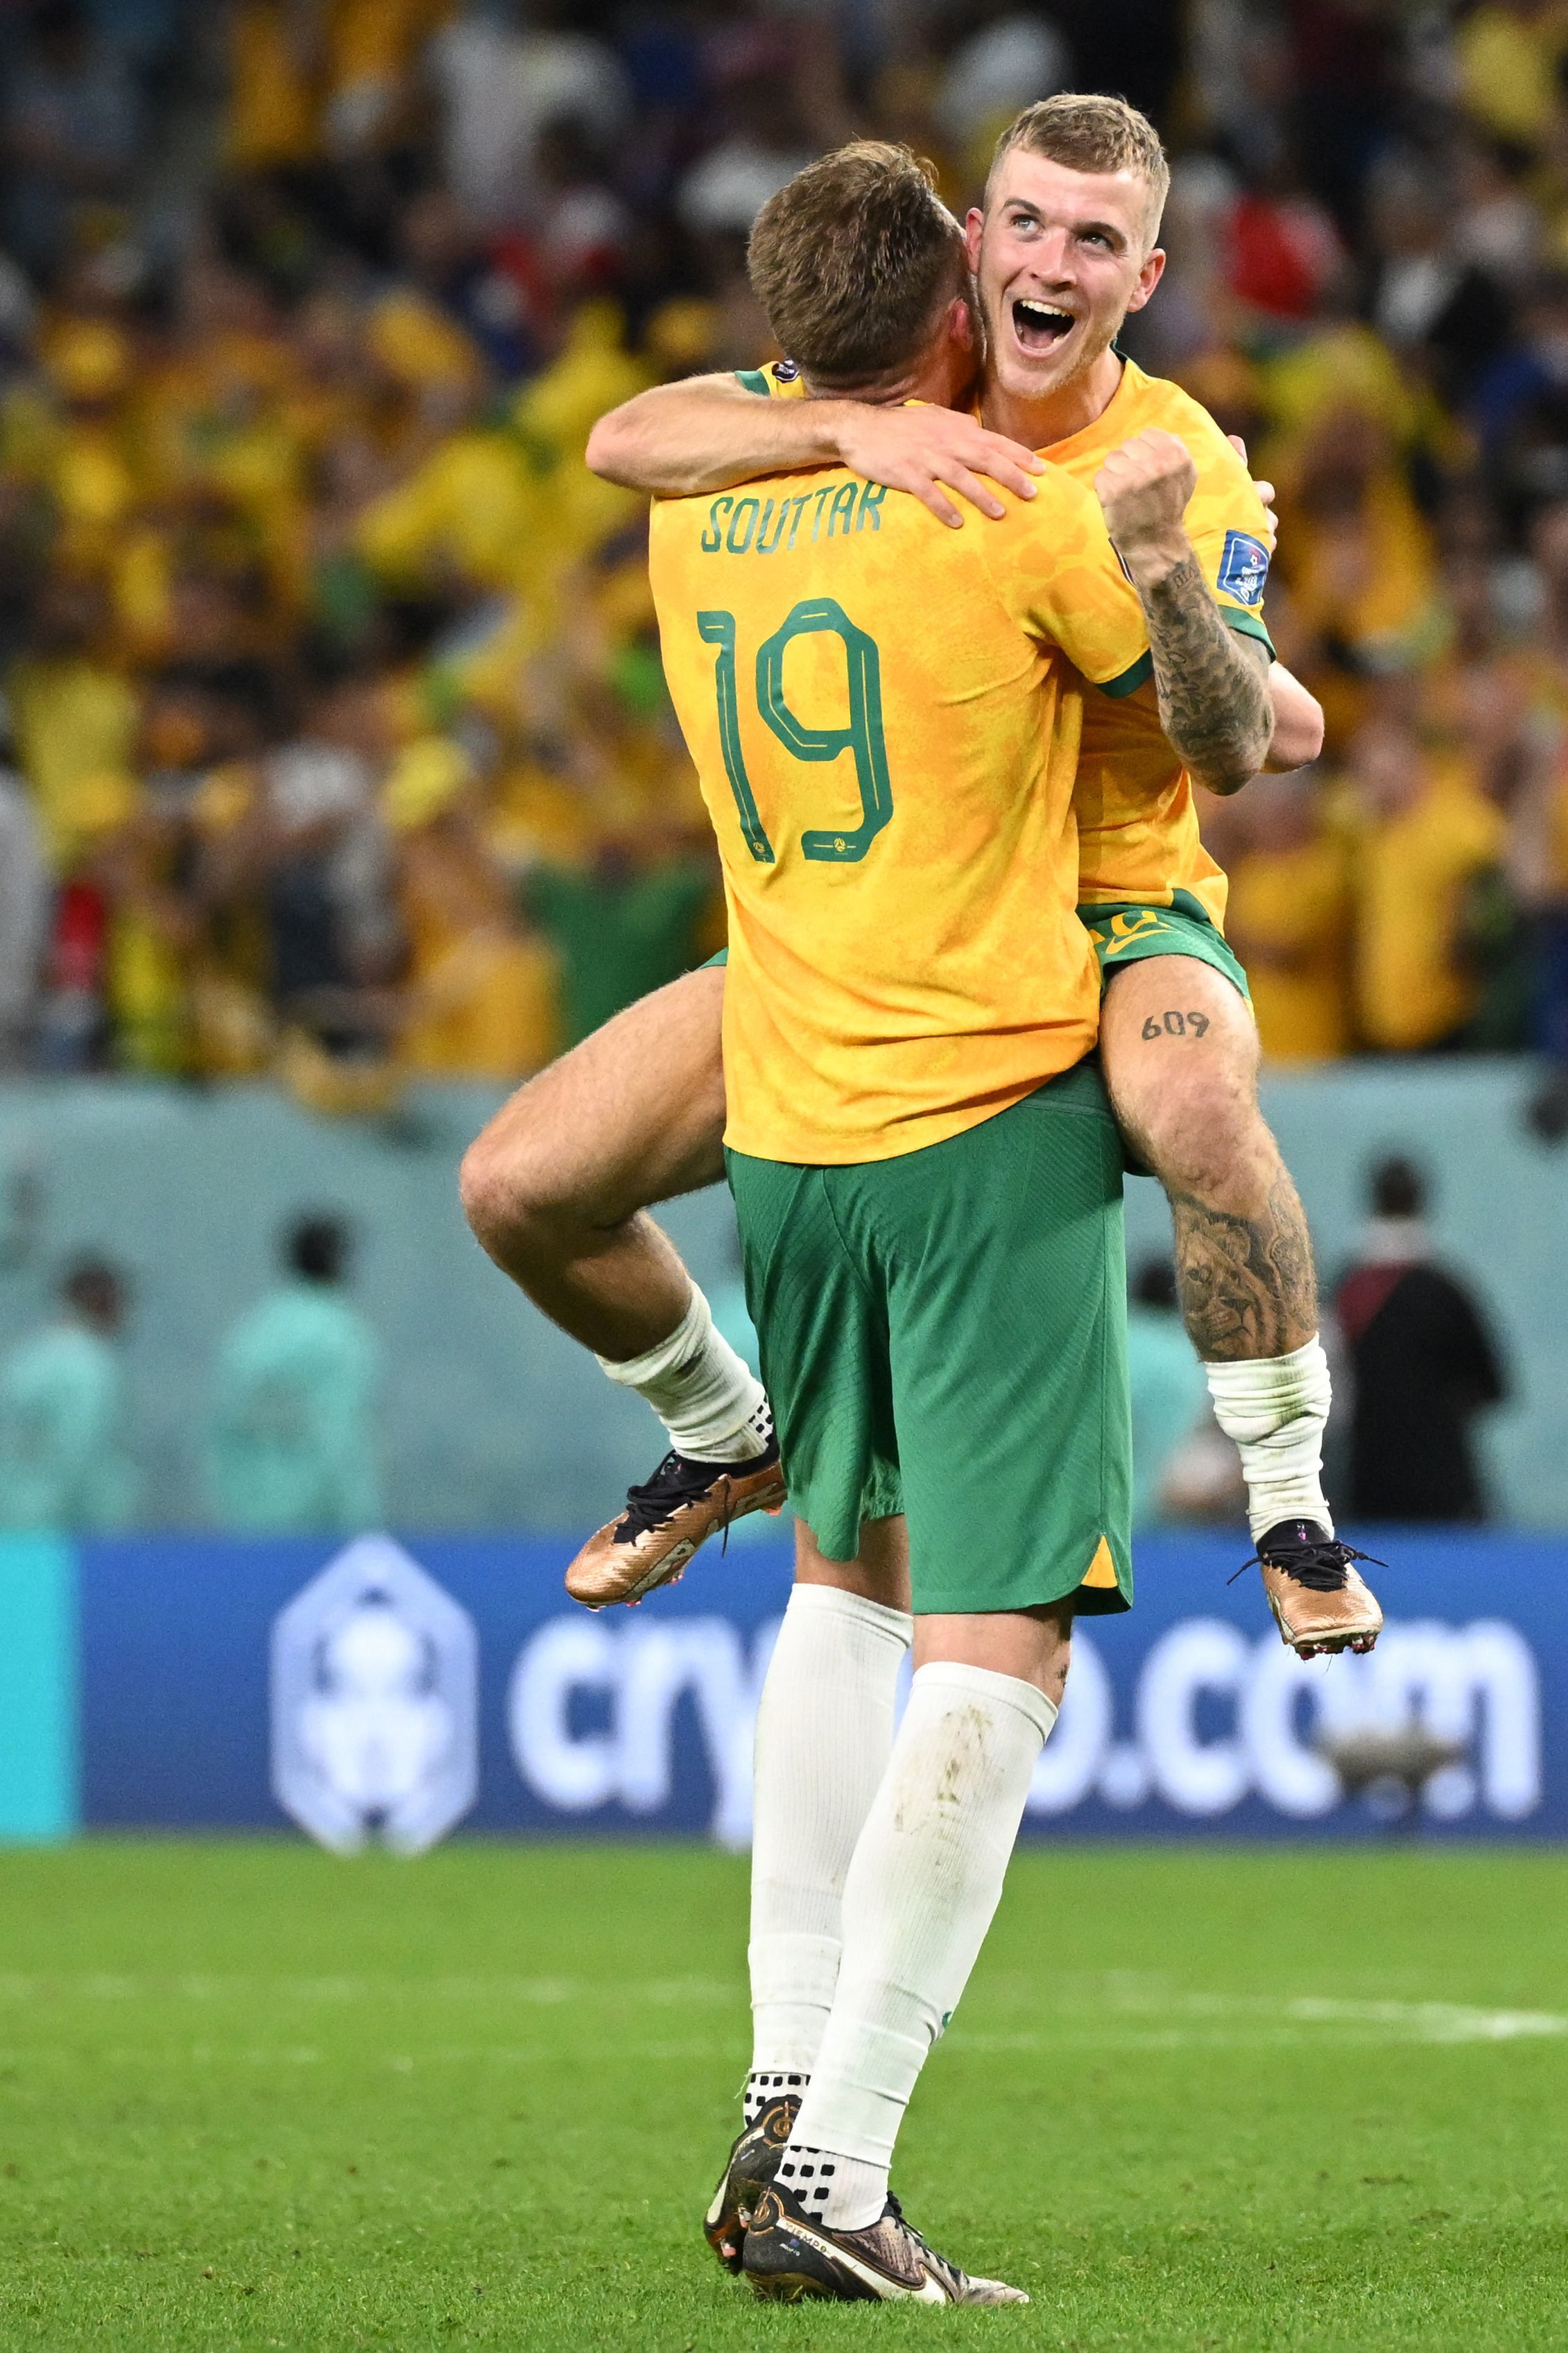 Duke se abraza a Souttar tras un gol de Australia.